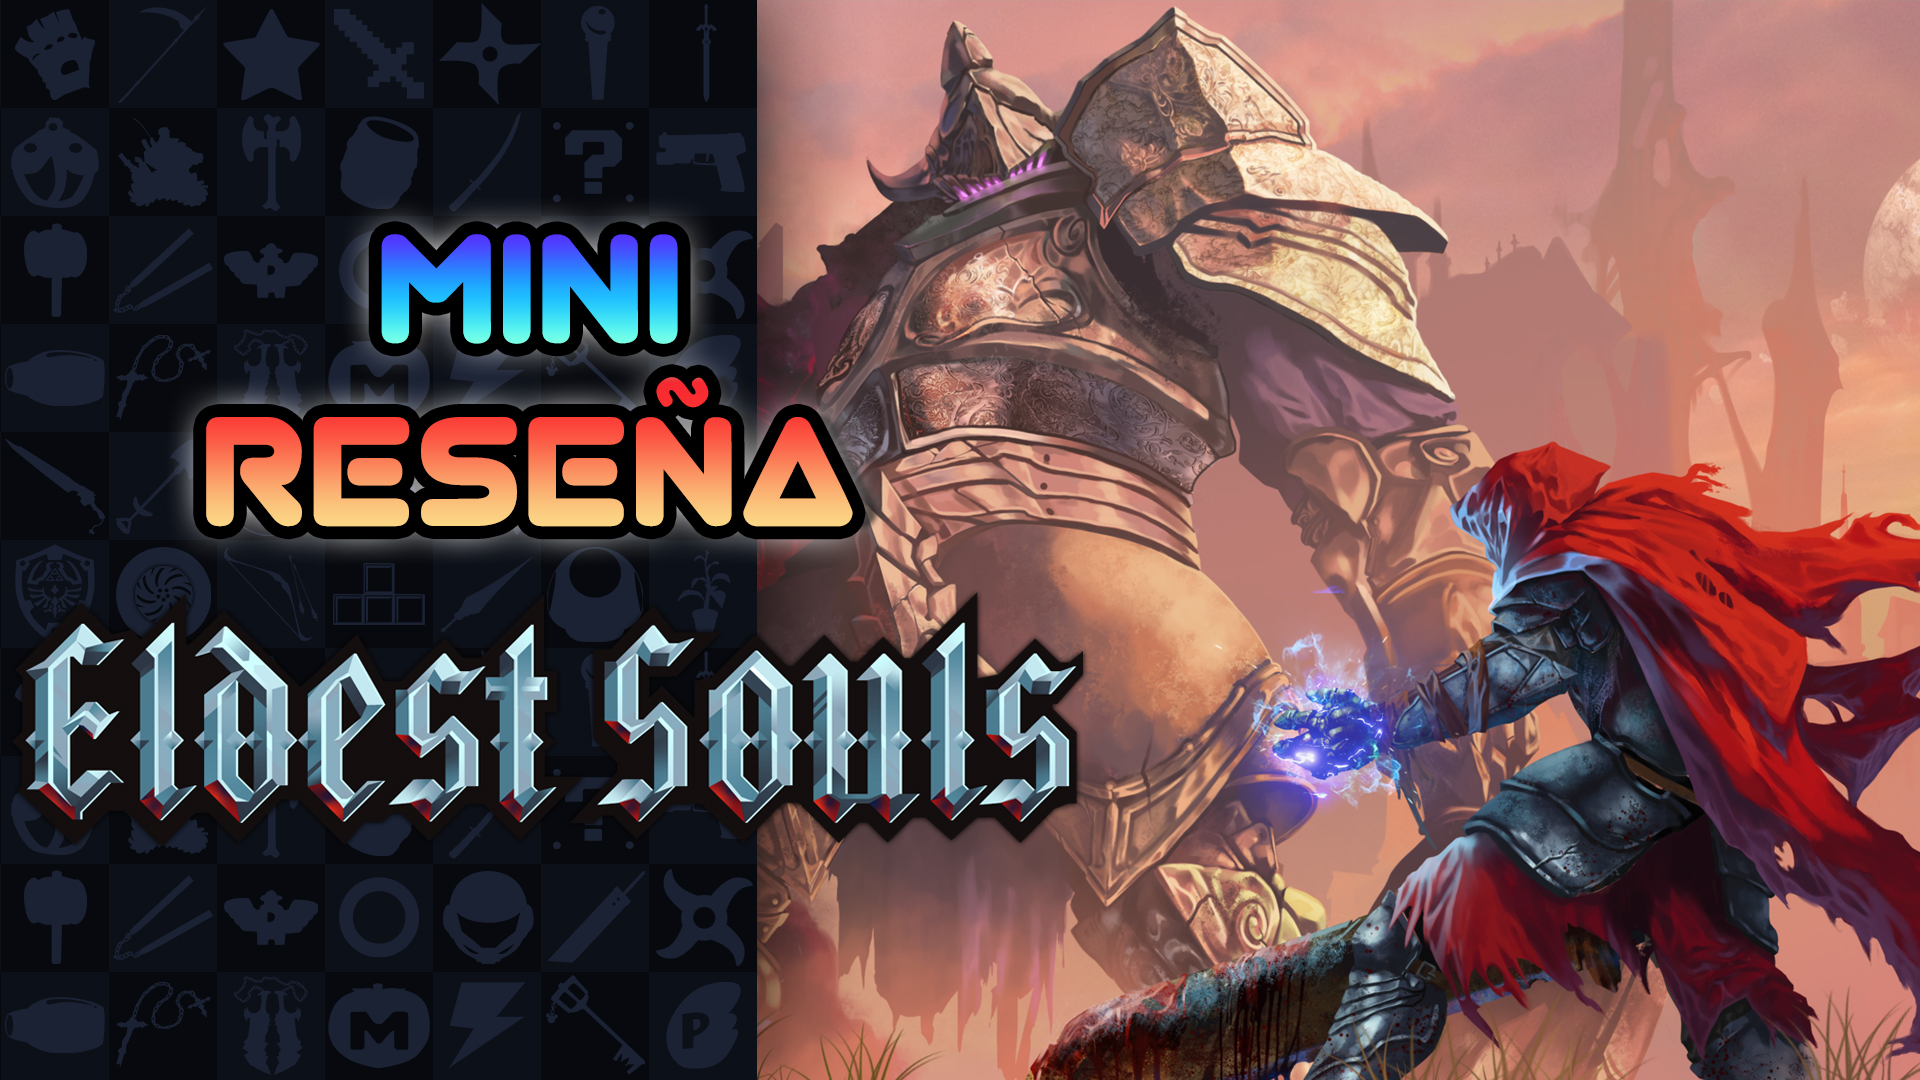 Mini Reseña Eldest Souls – Otro divertido boss-rush en un reino decadente